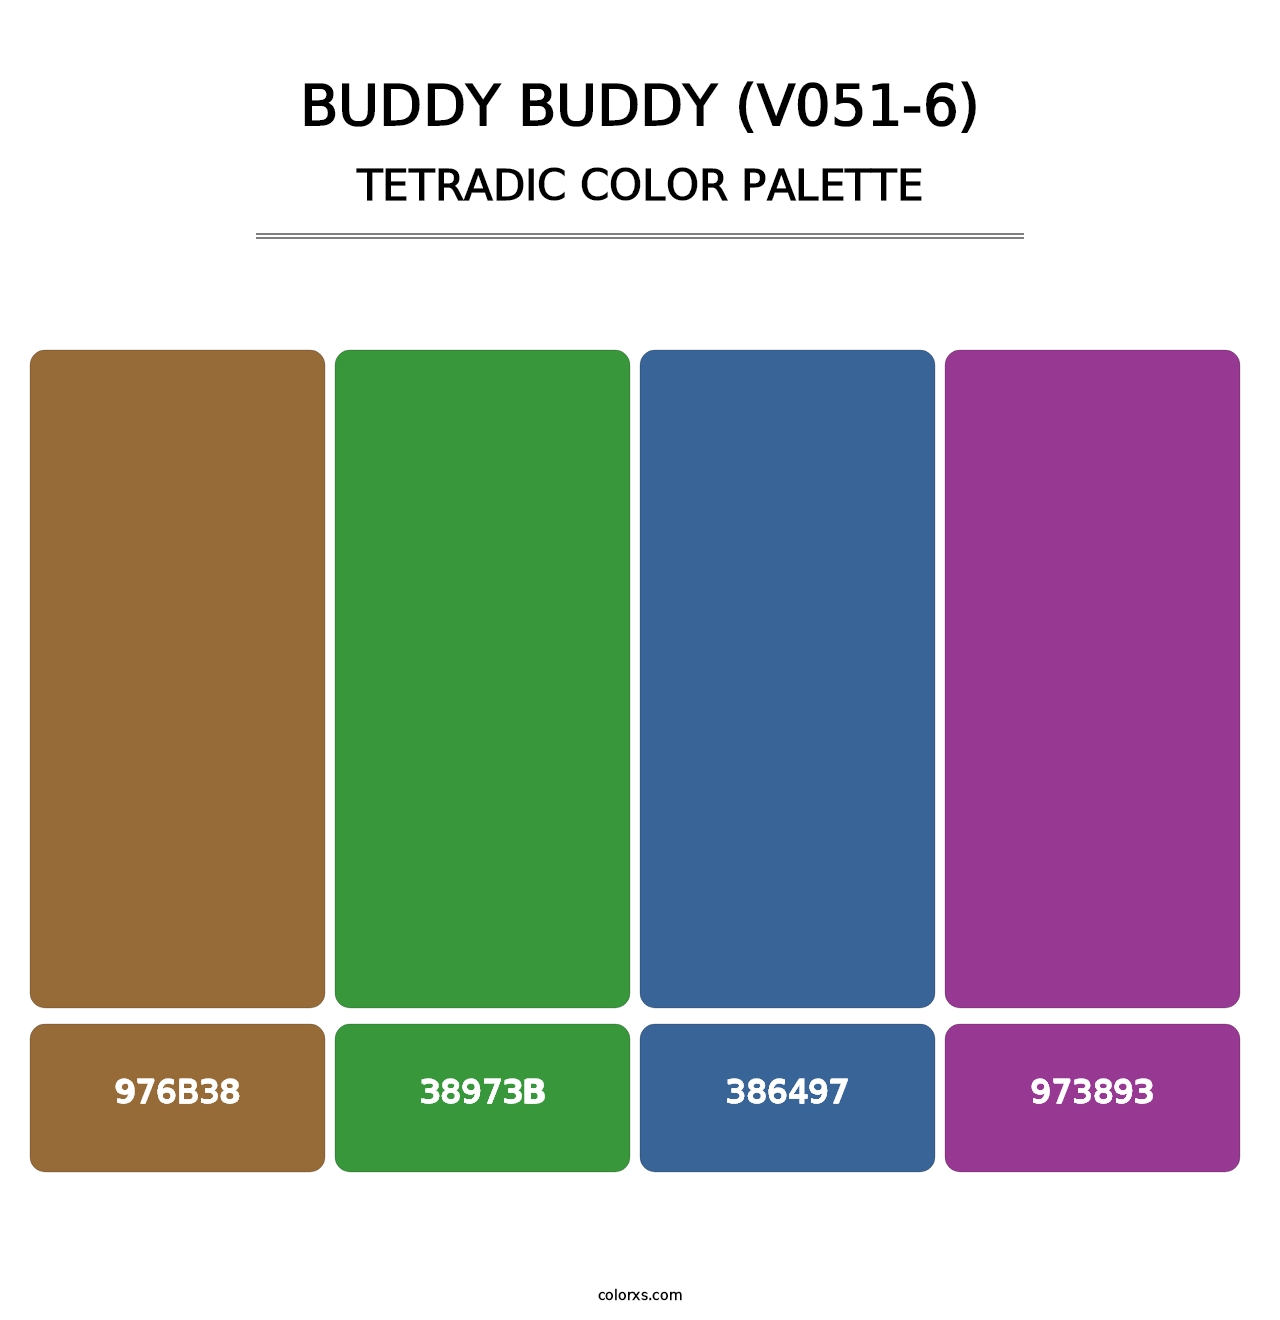 Buddy Buddy (V051-6) - Tetradic Color Palette